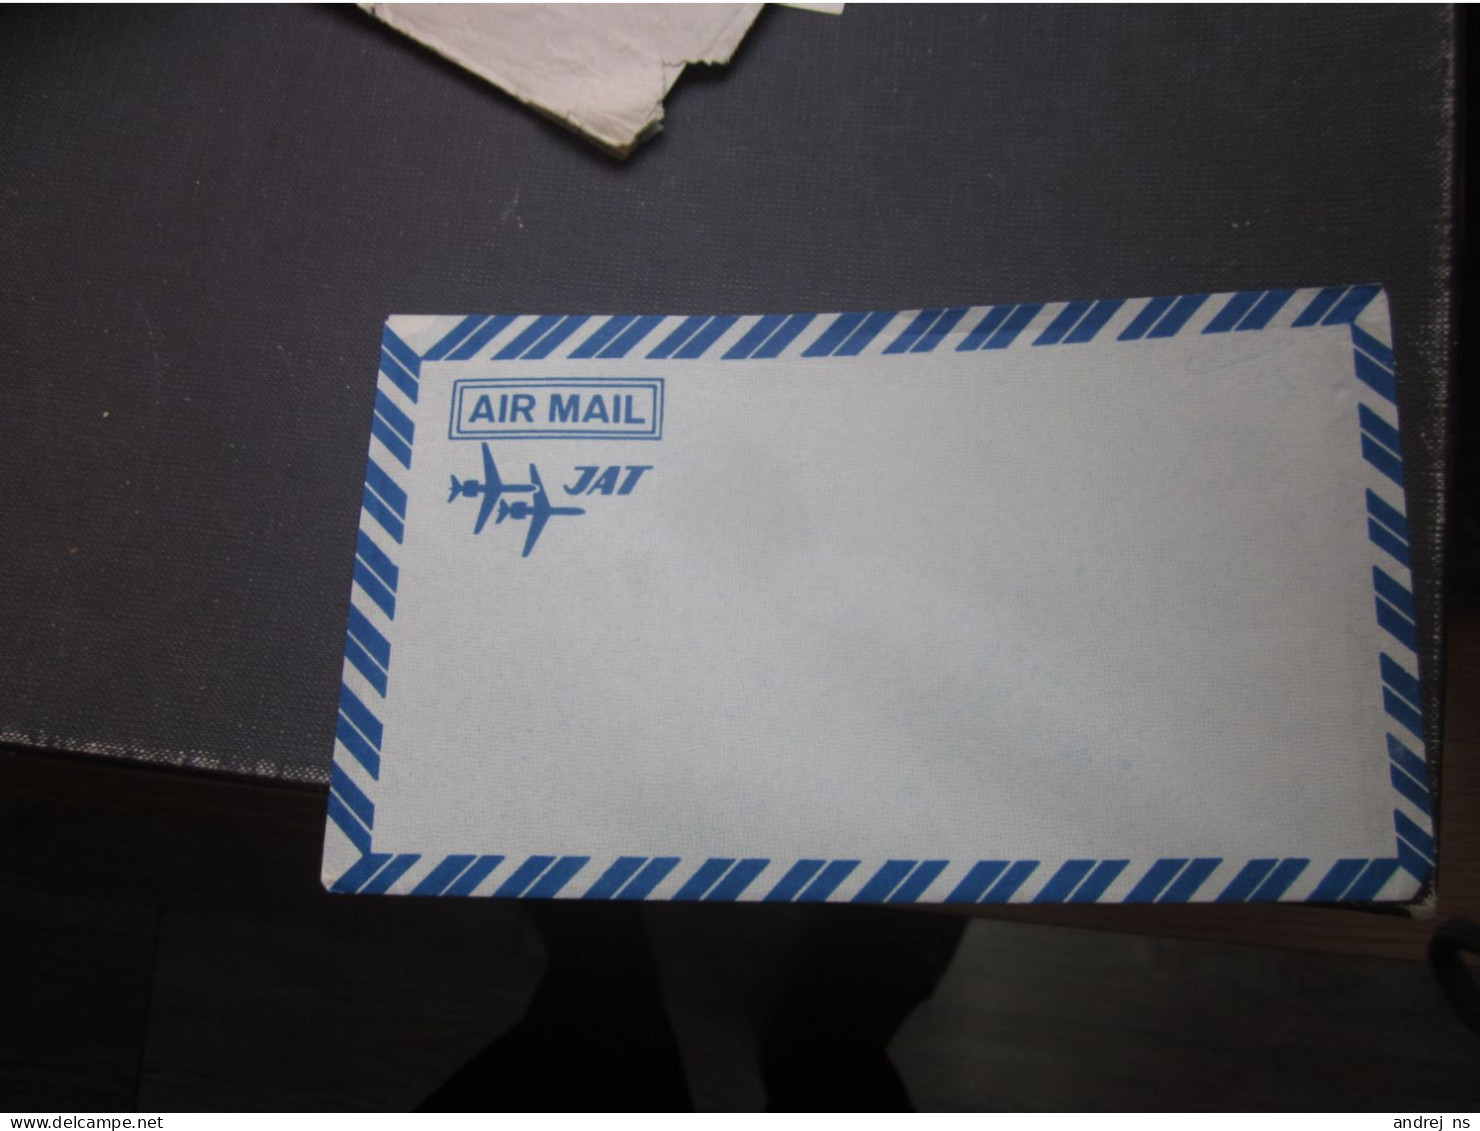 Air Mail JAT Yugoslav Airlines - Airmail